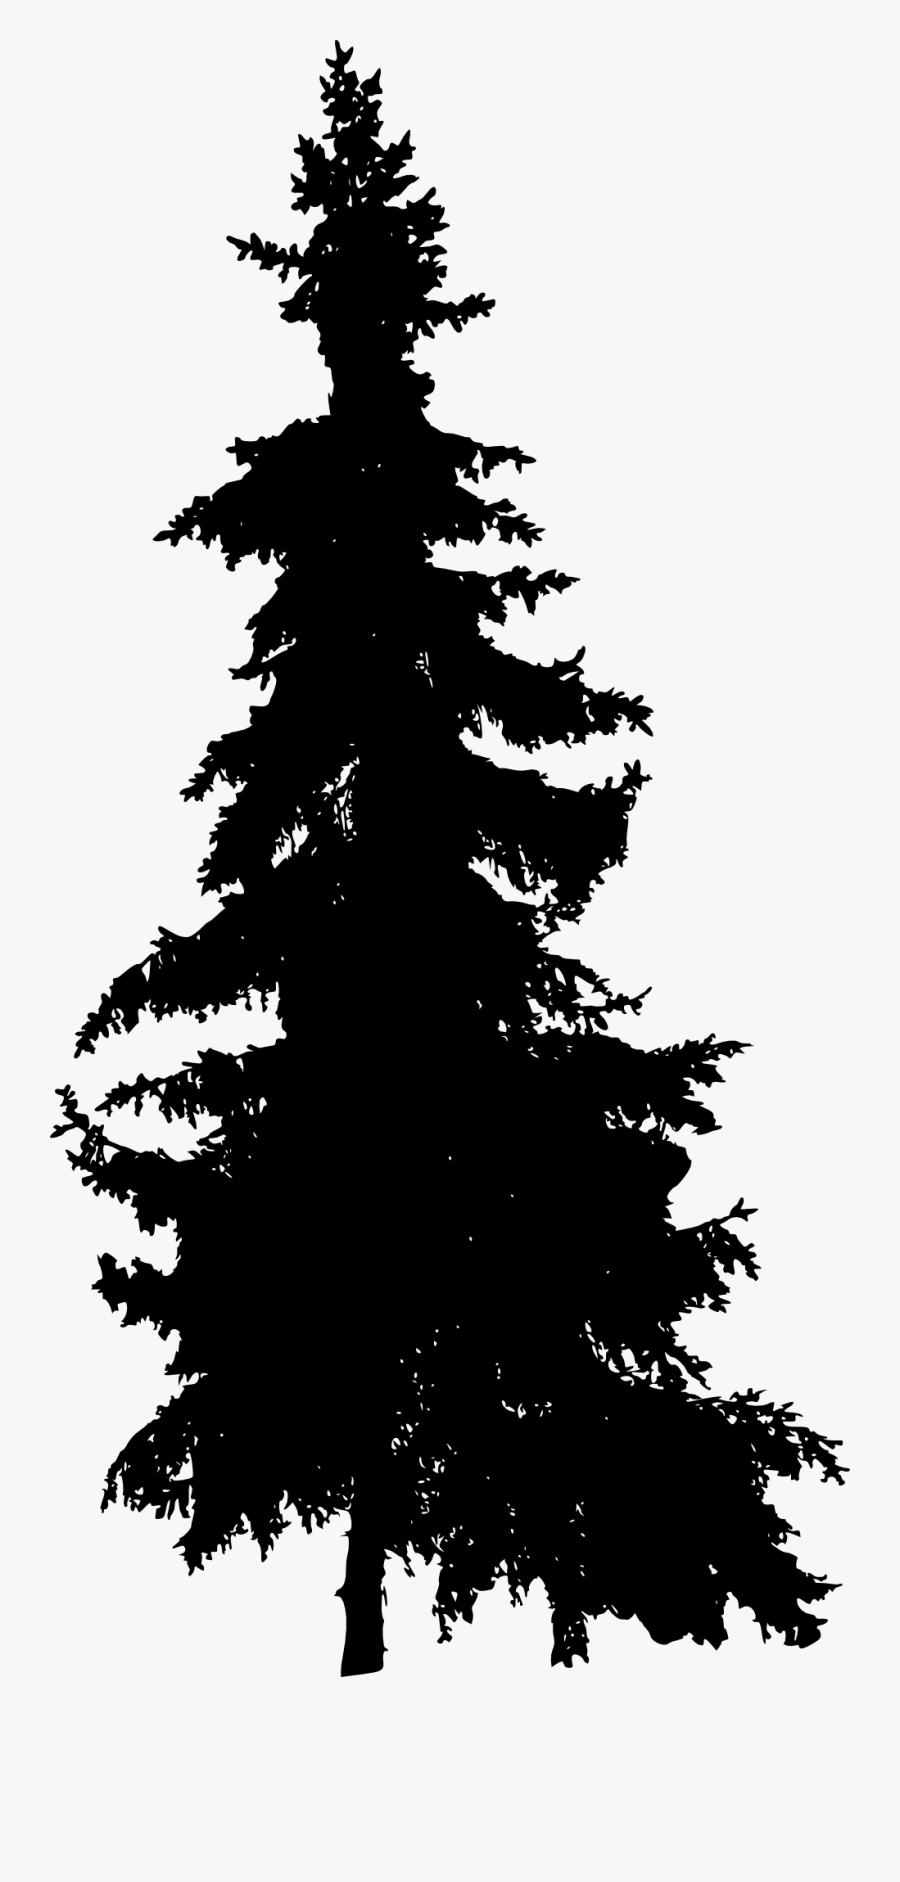 Pine Tree Silhouette 3 - Pine Tree Silhouette Png, Transparent Clipart